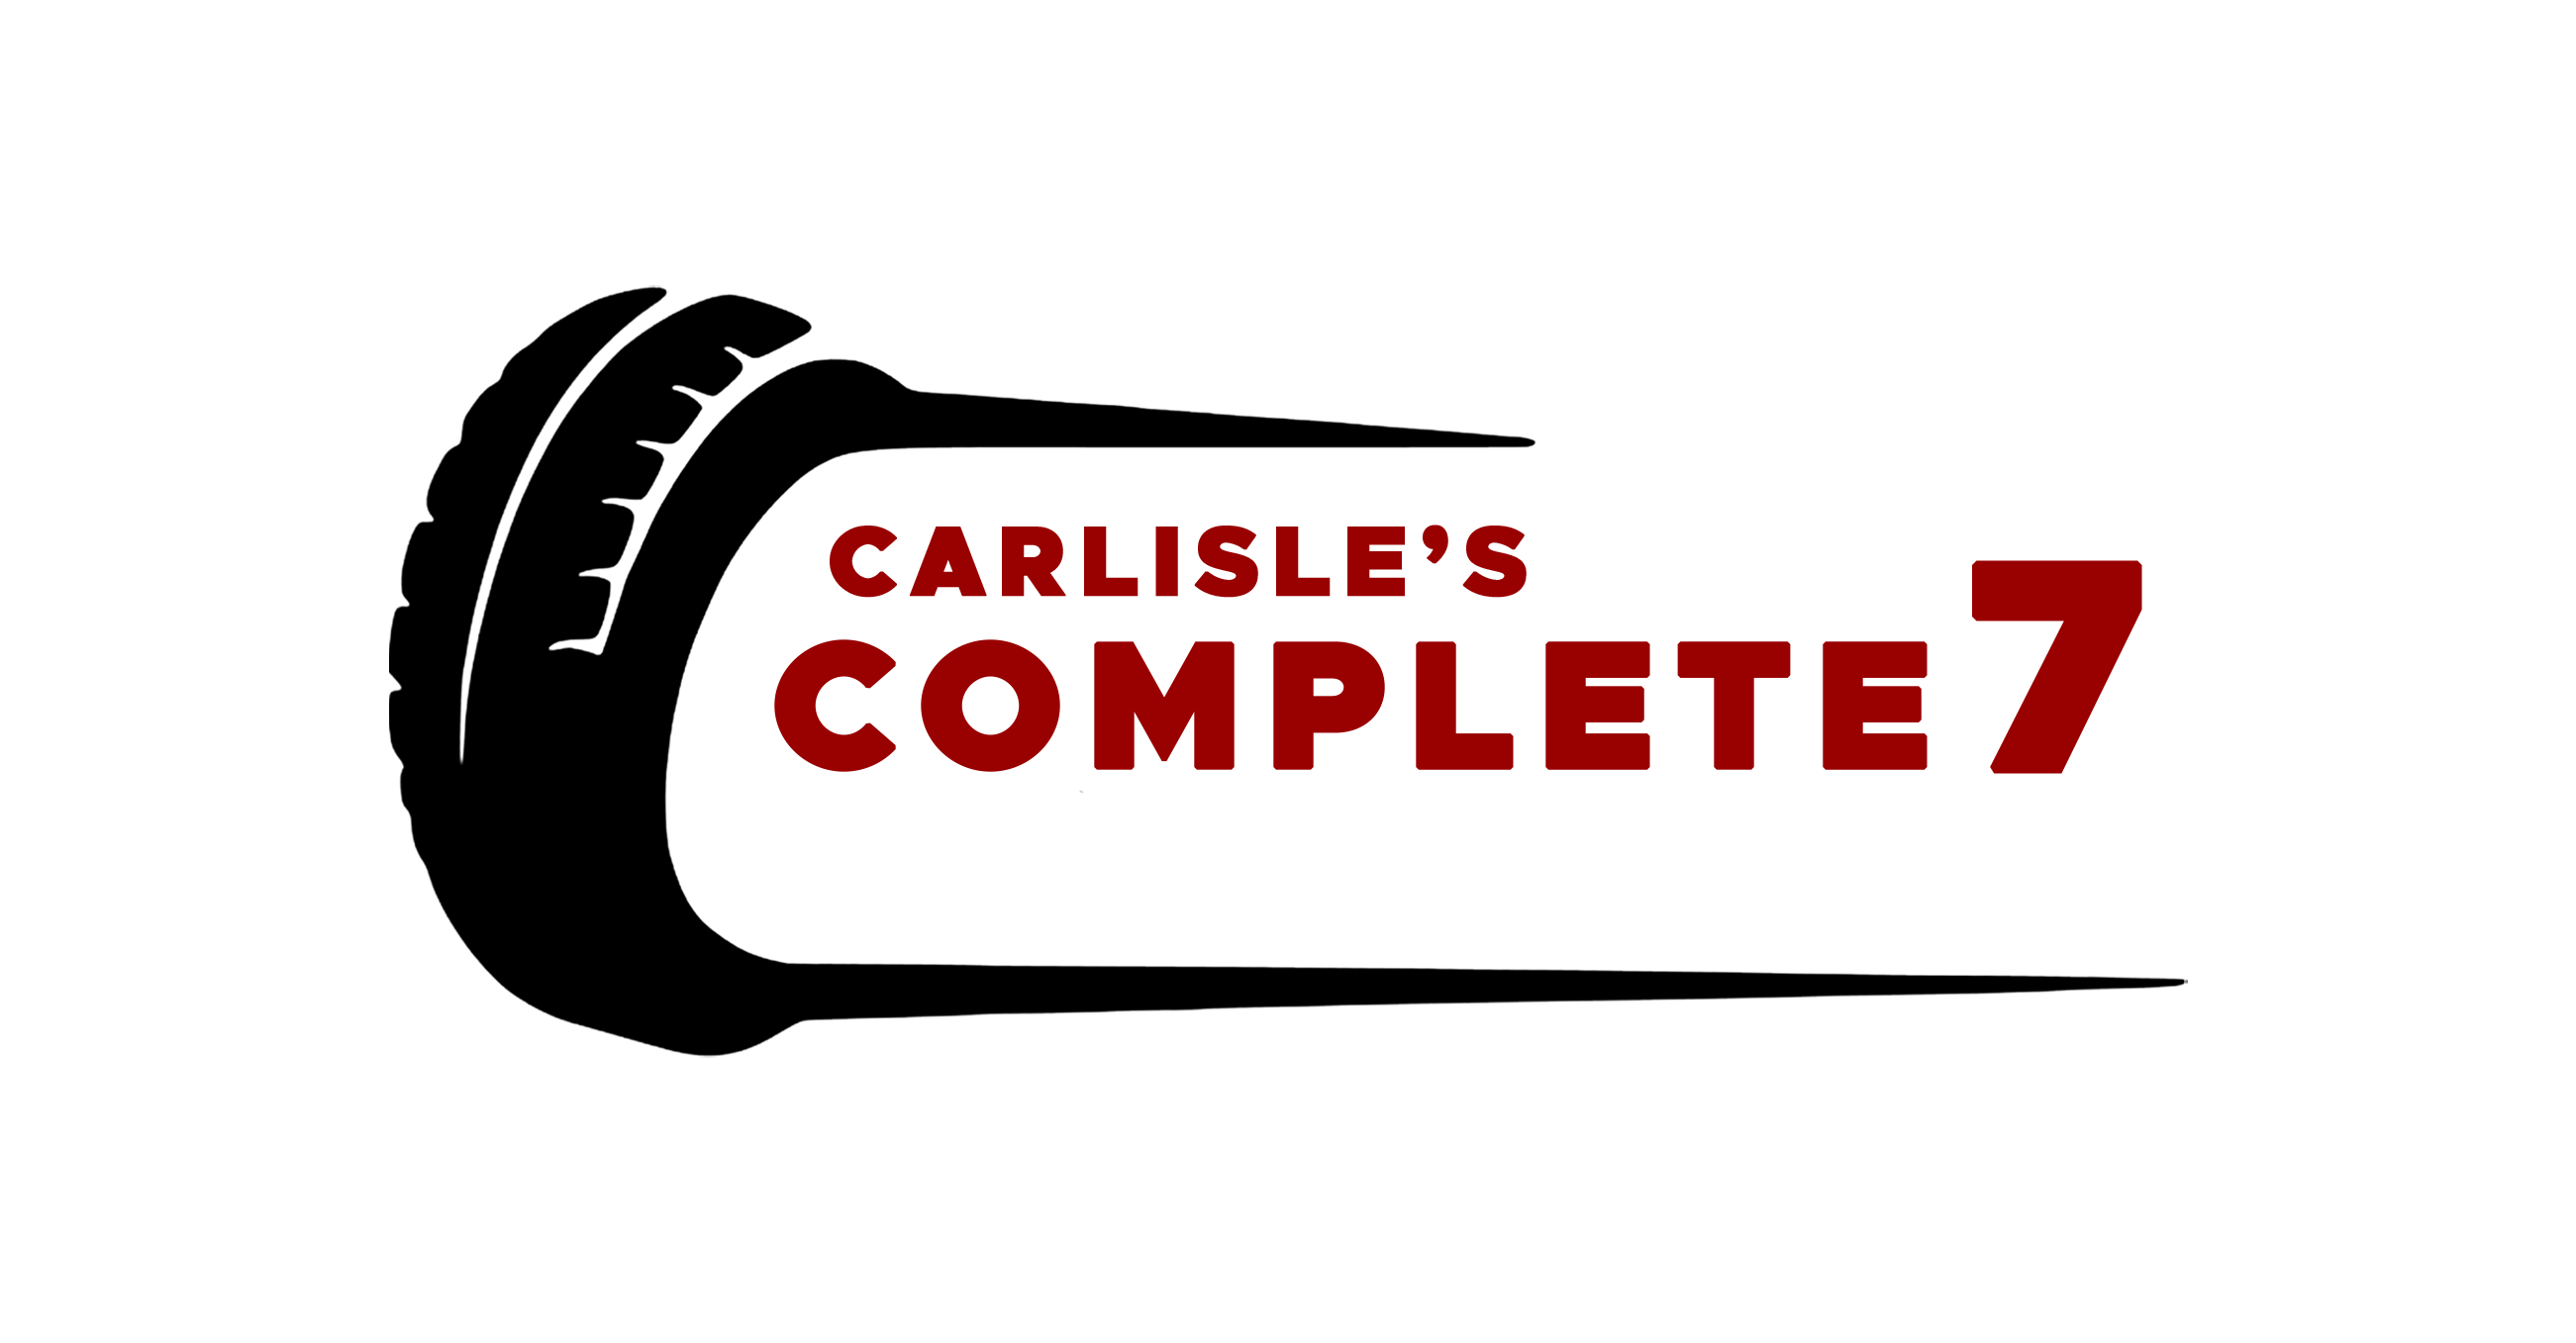 Carlisles Complete 7